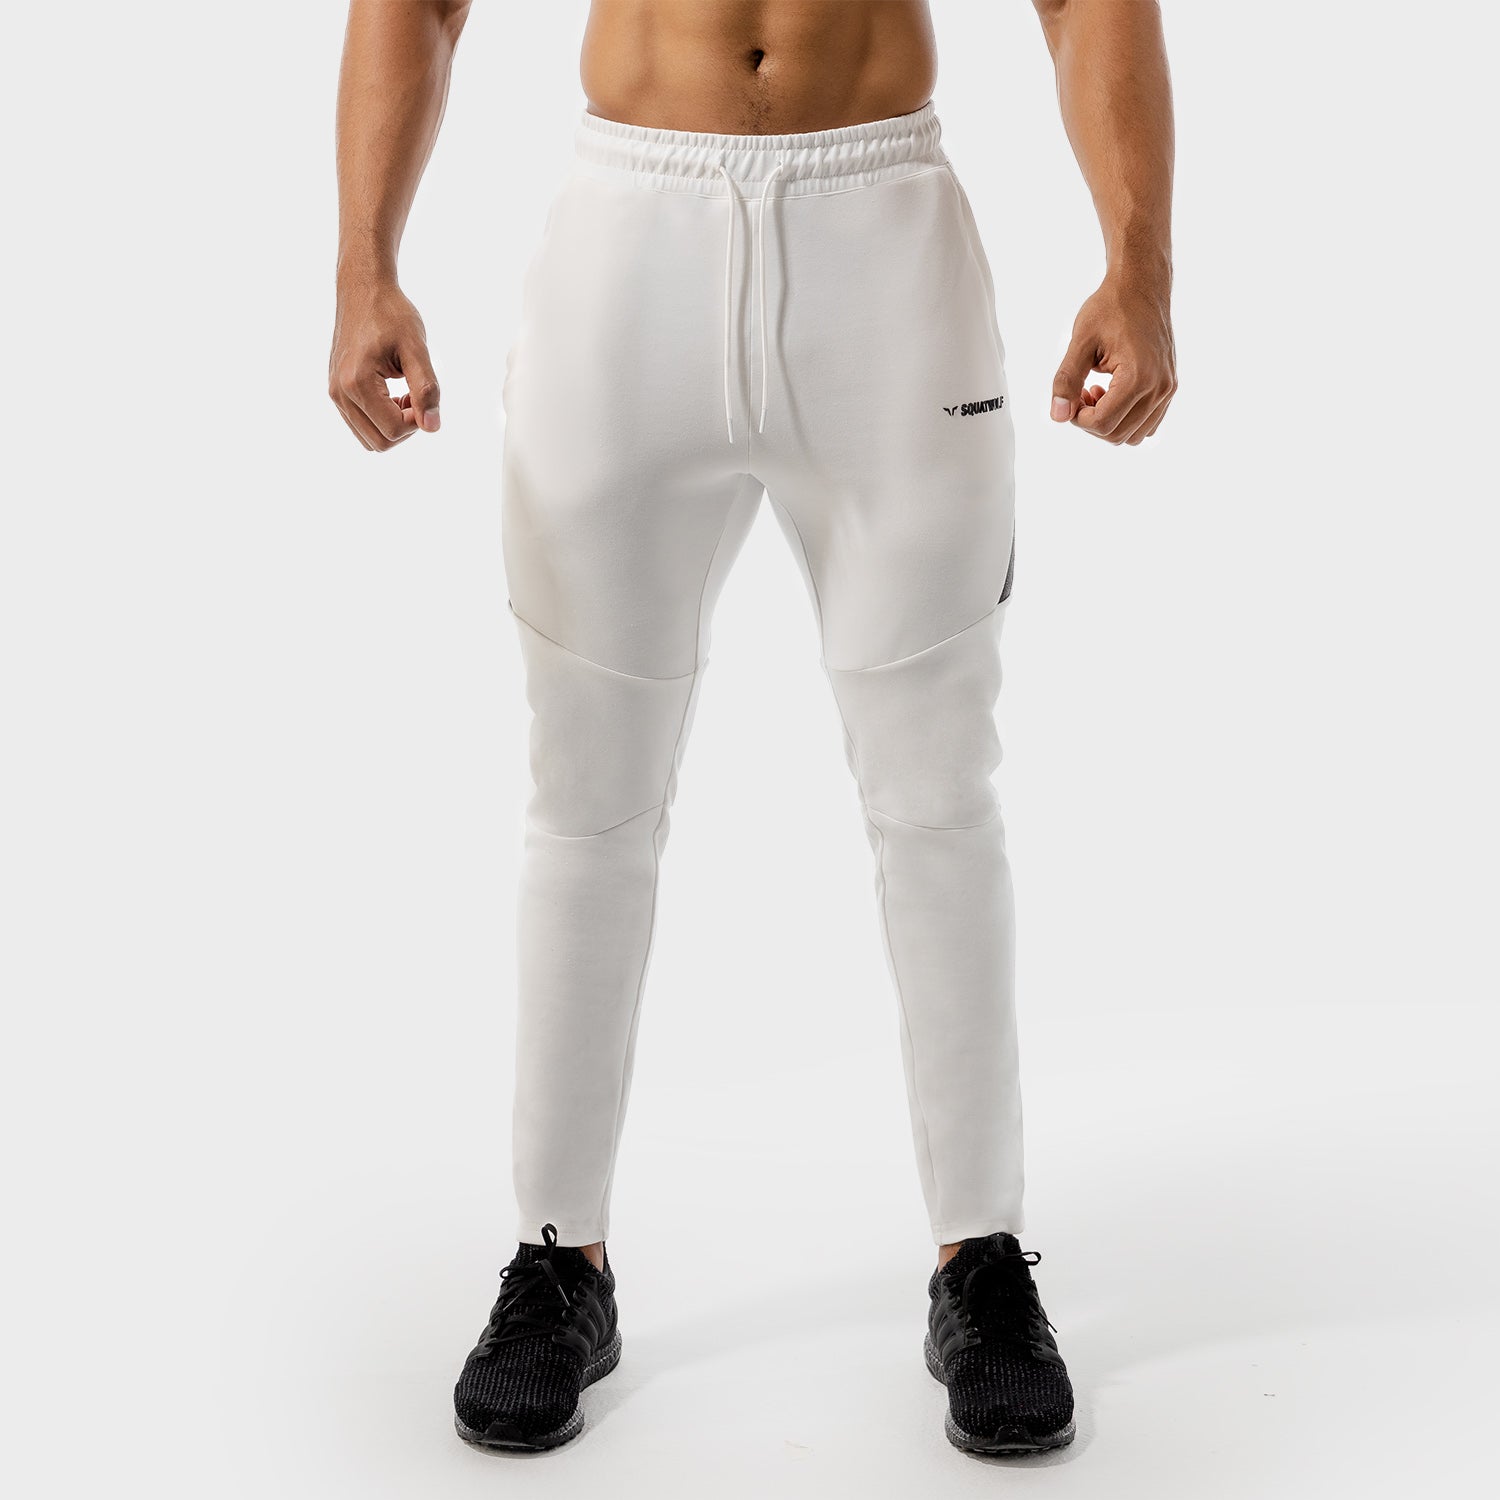 squatwolf-gym-wear-warrior-jogger-pants-white-workout-pants-for-men